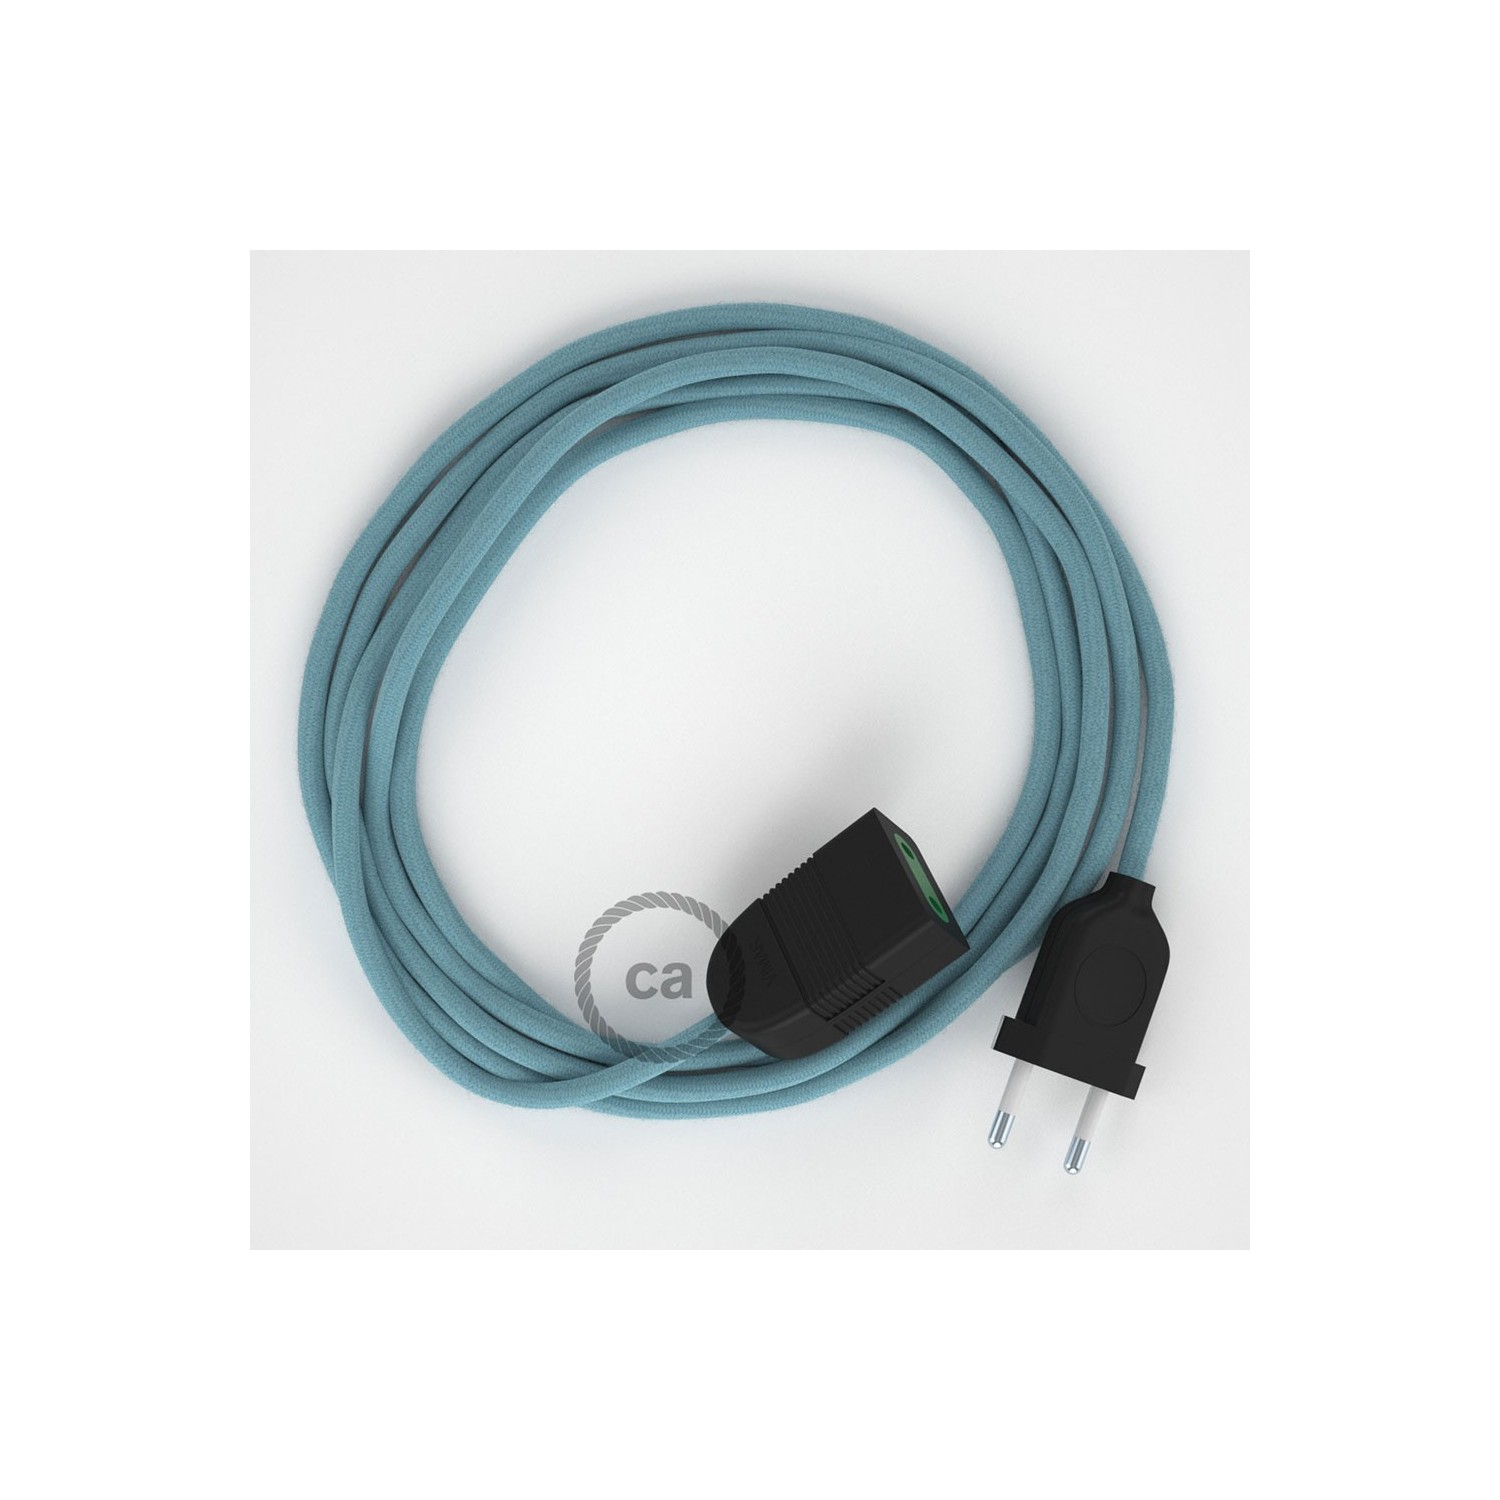 Produžni kabel za napajanje (2P 10A) Svjetlo Plavi Pamuk RC53 - Made in Italy